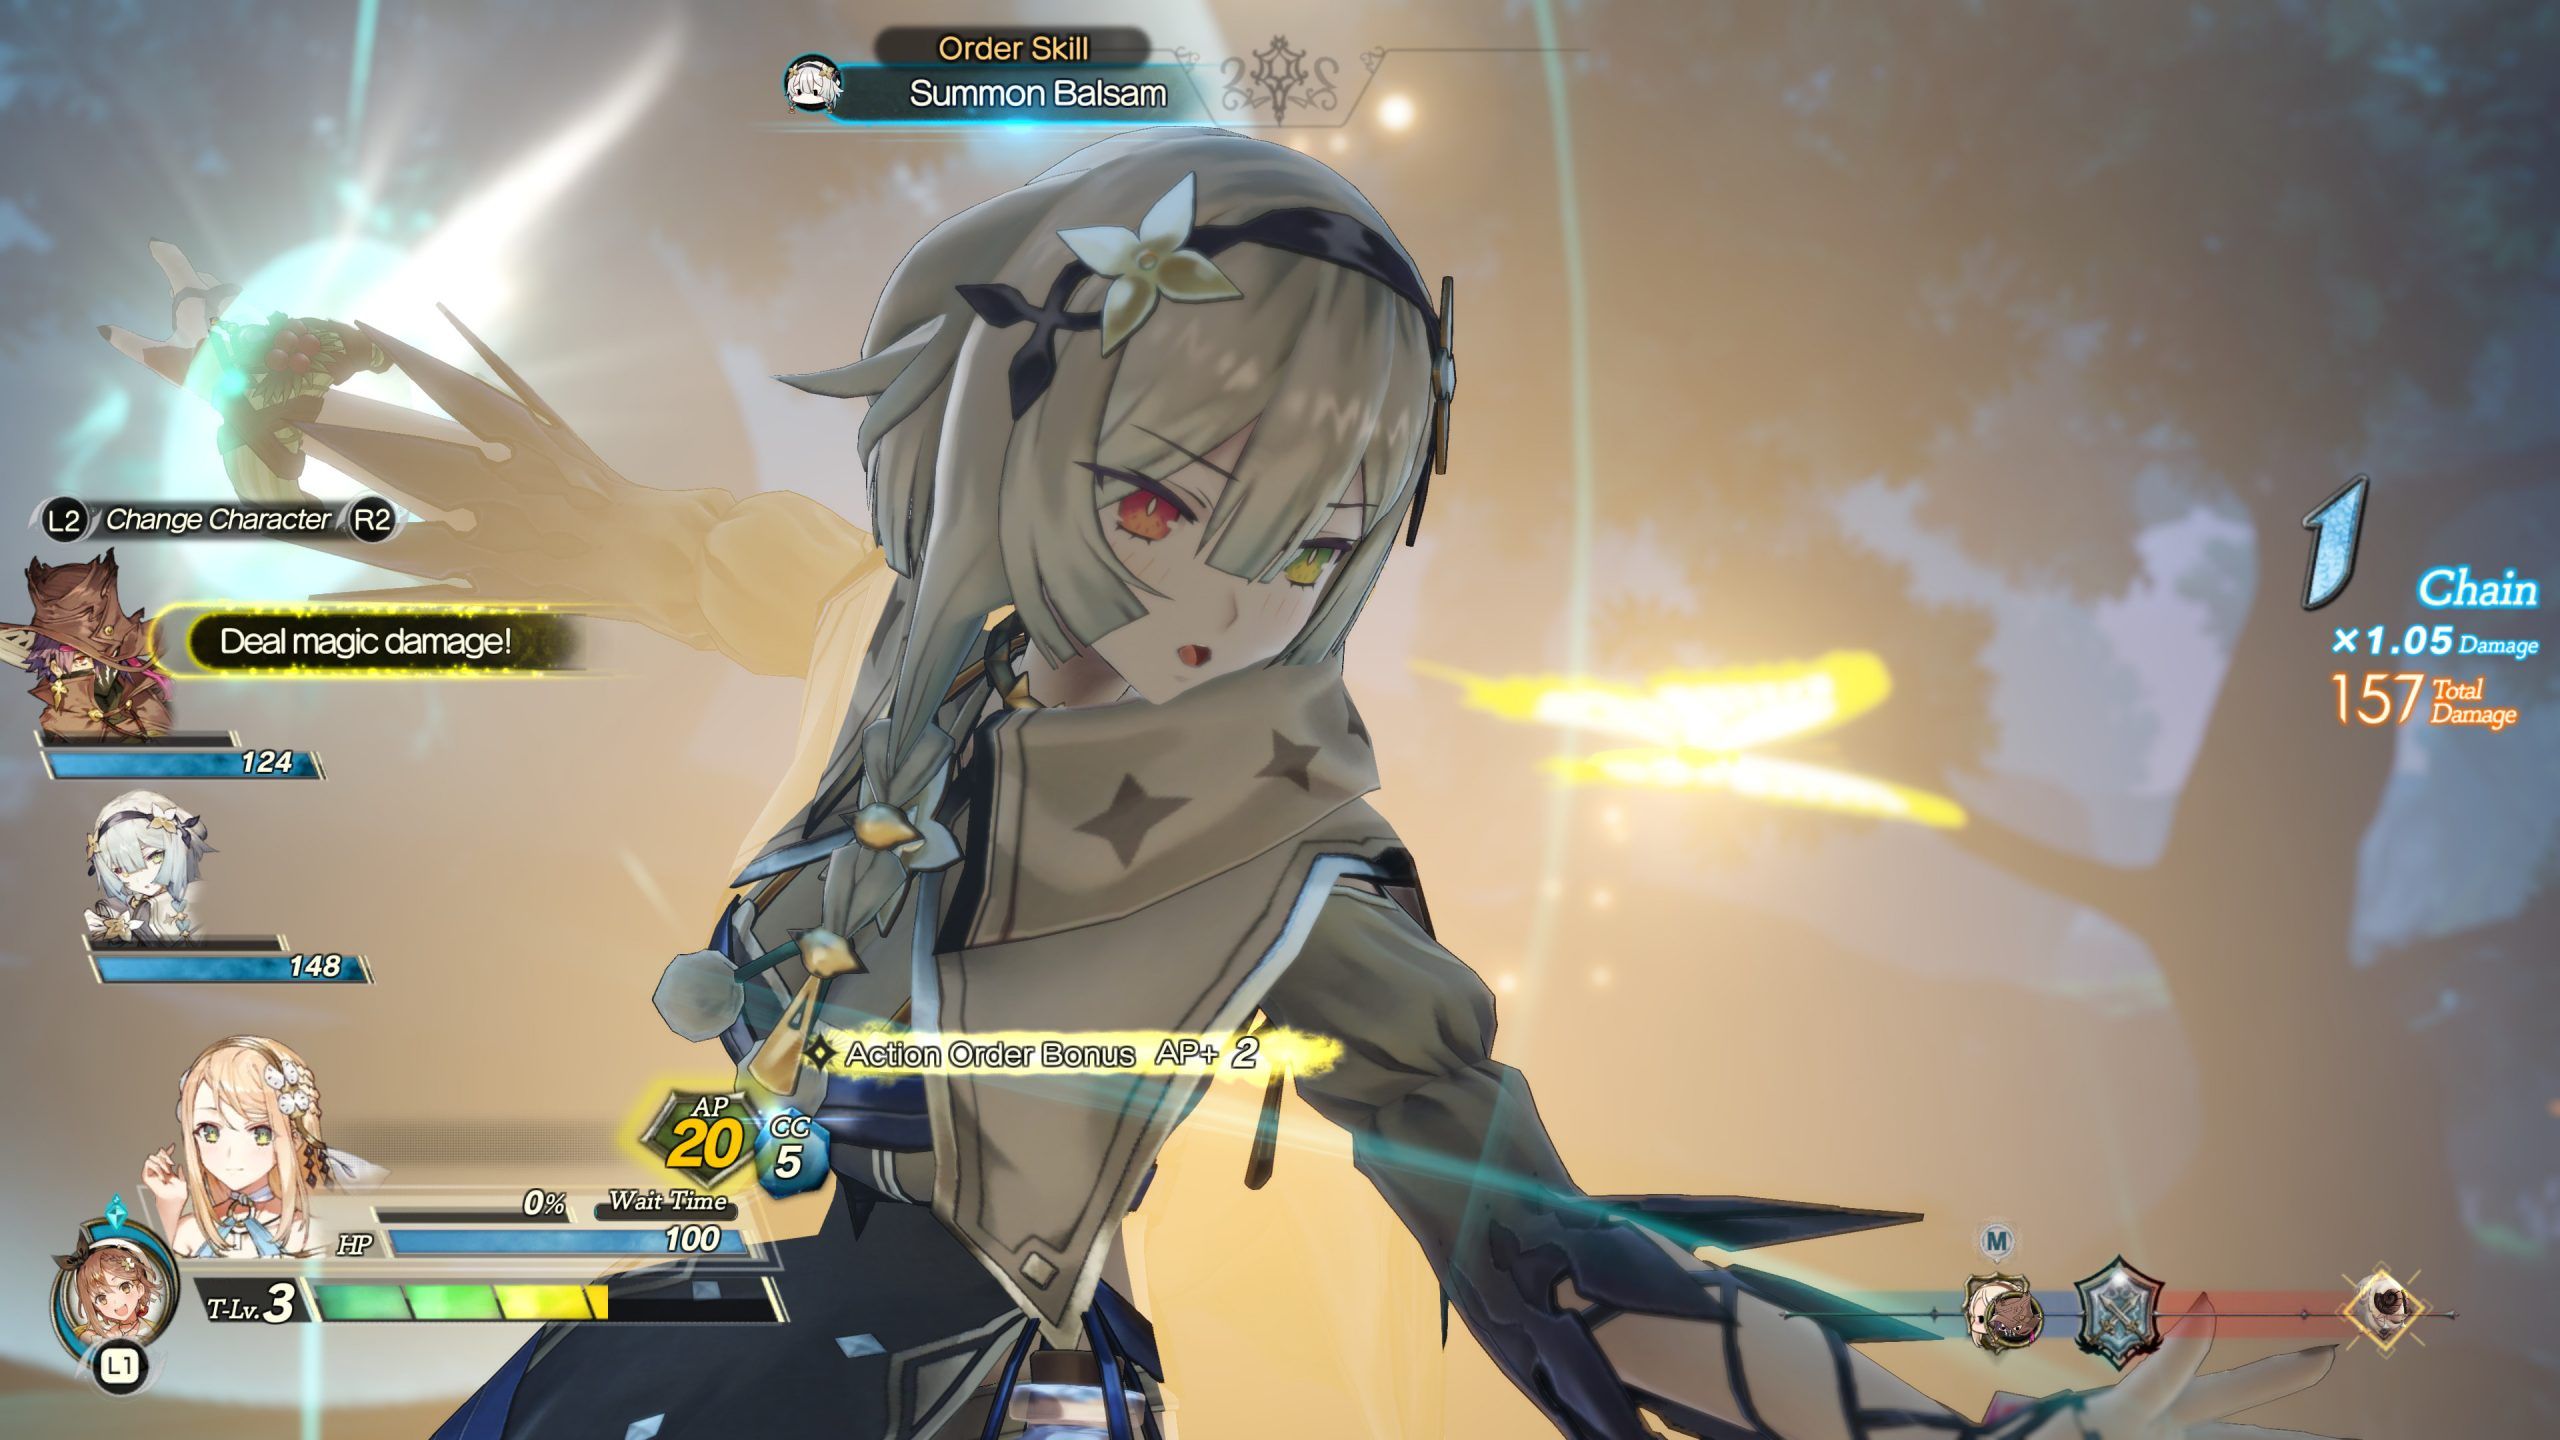 Atelier Ryza 2 screenshots battle system Serri order skill